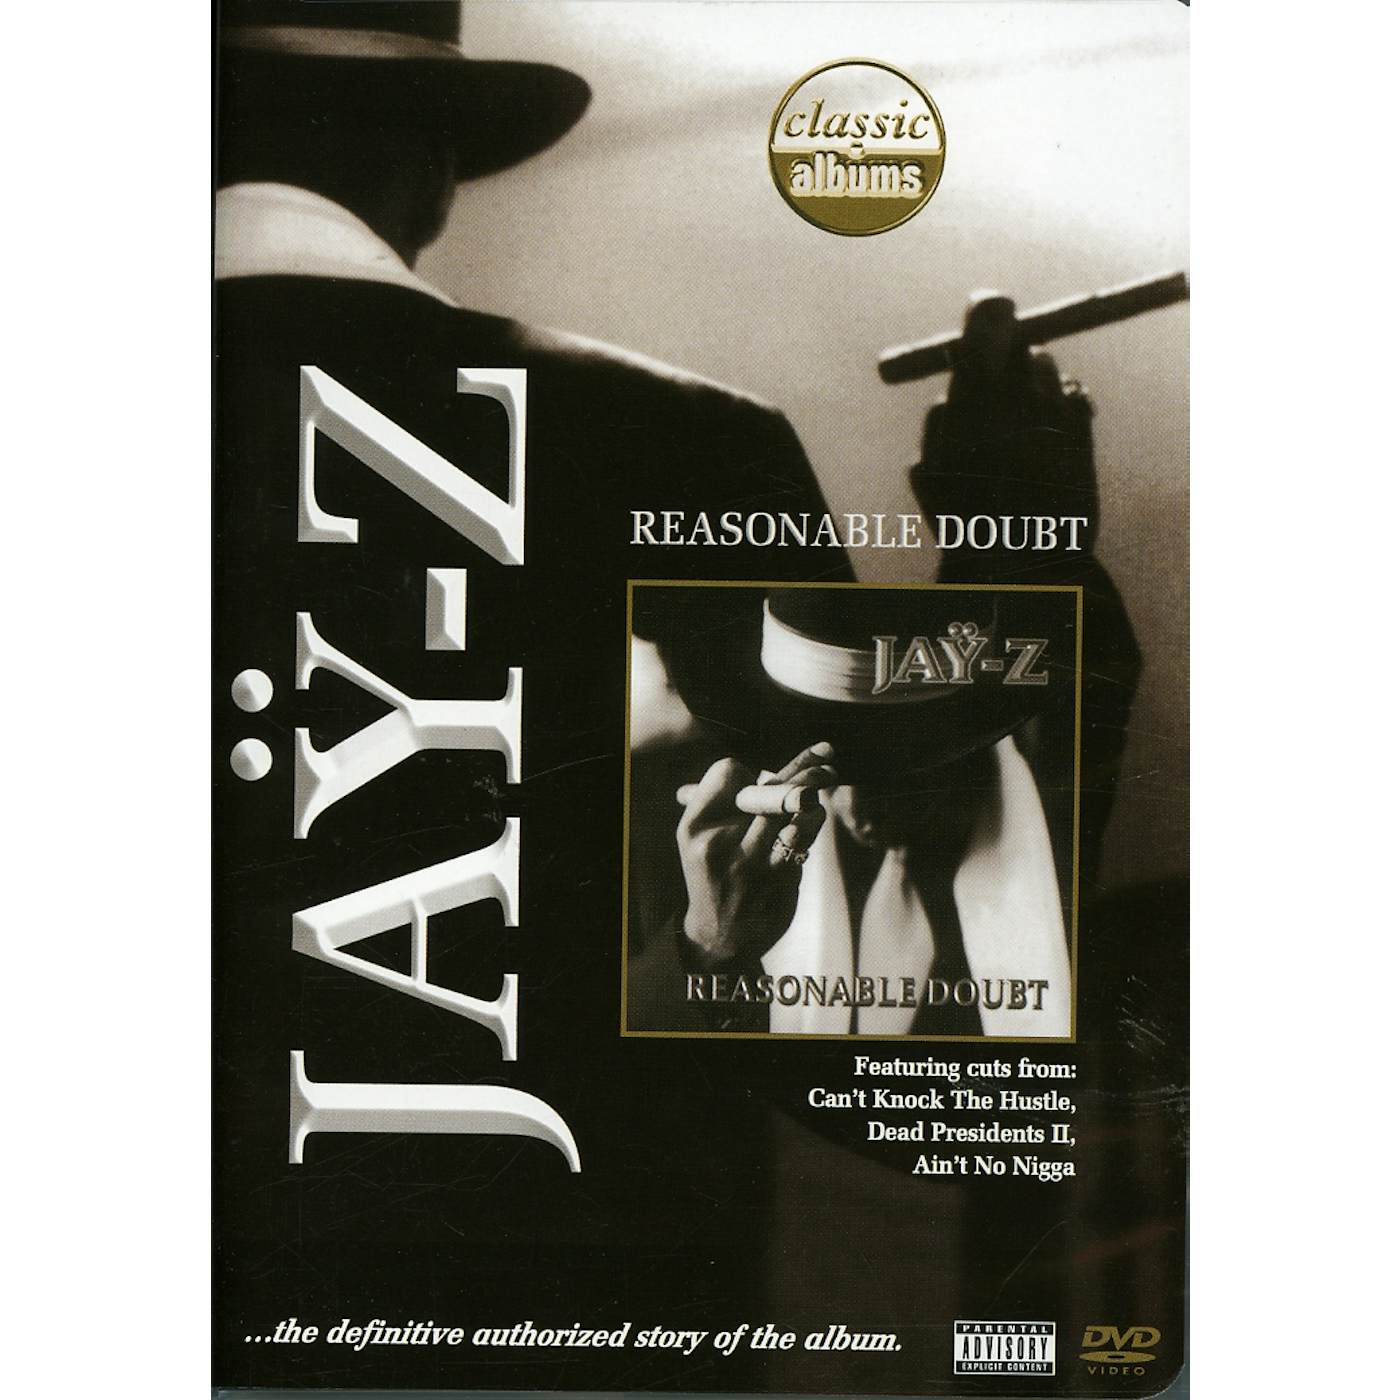 JAY-Z CLASSIC ALBUM: REASONABLE DOUBT DVD